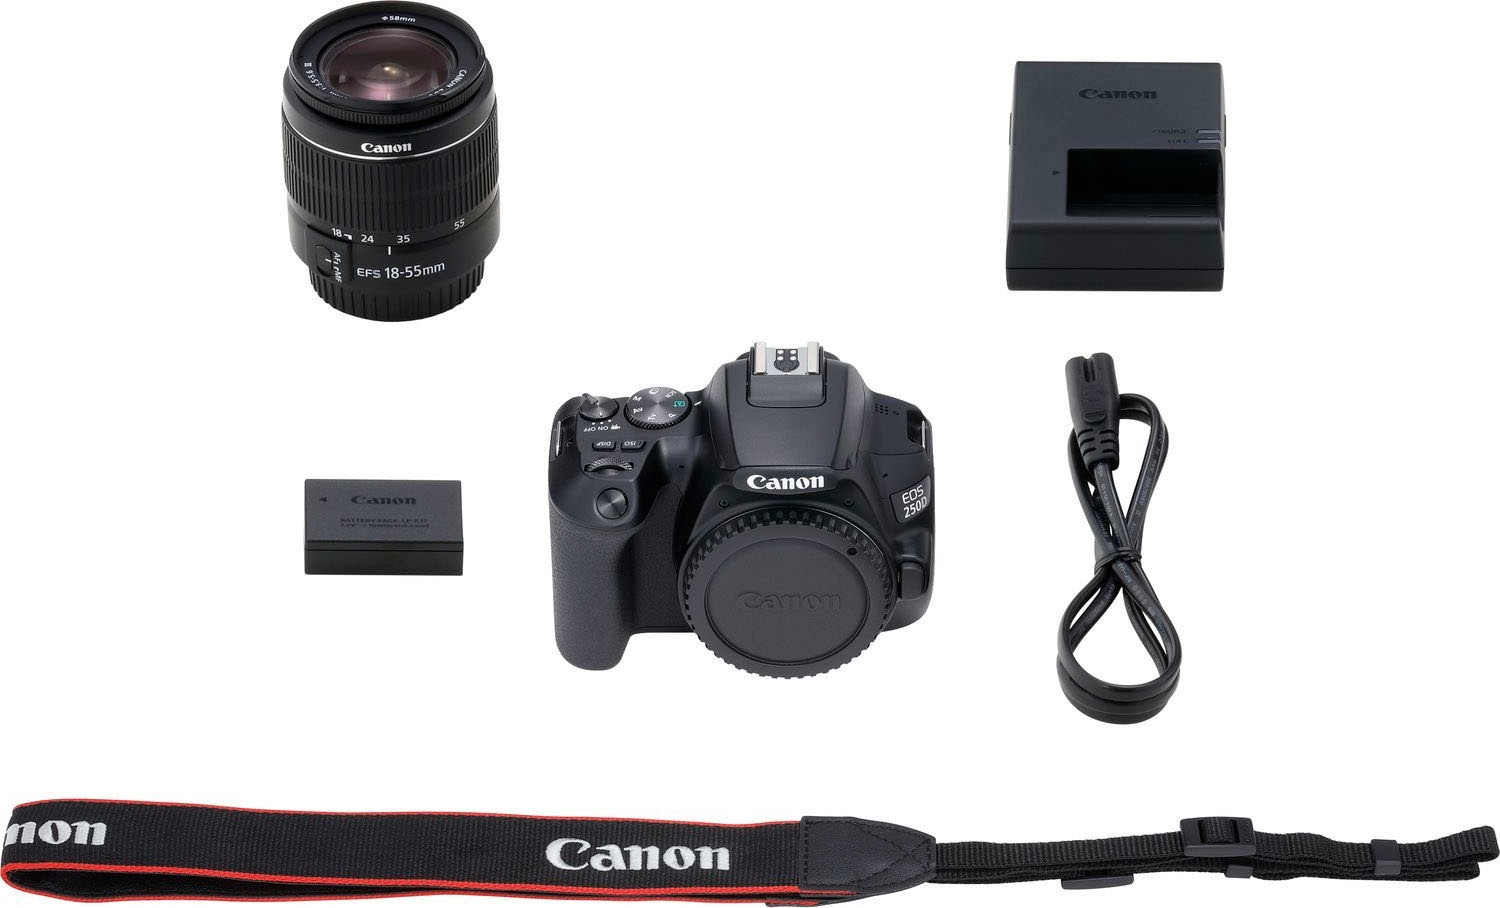 »250D SB130 MP, III, III + 18-55mm Shop EF-S im f/3.5-5.6 f/3.5-5.6 24,1 Bluetooth-WLAN + OTTO EF-S Online 18-55mm Kit«, Systemkamera Canon